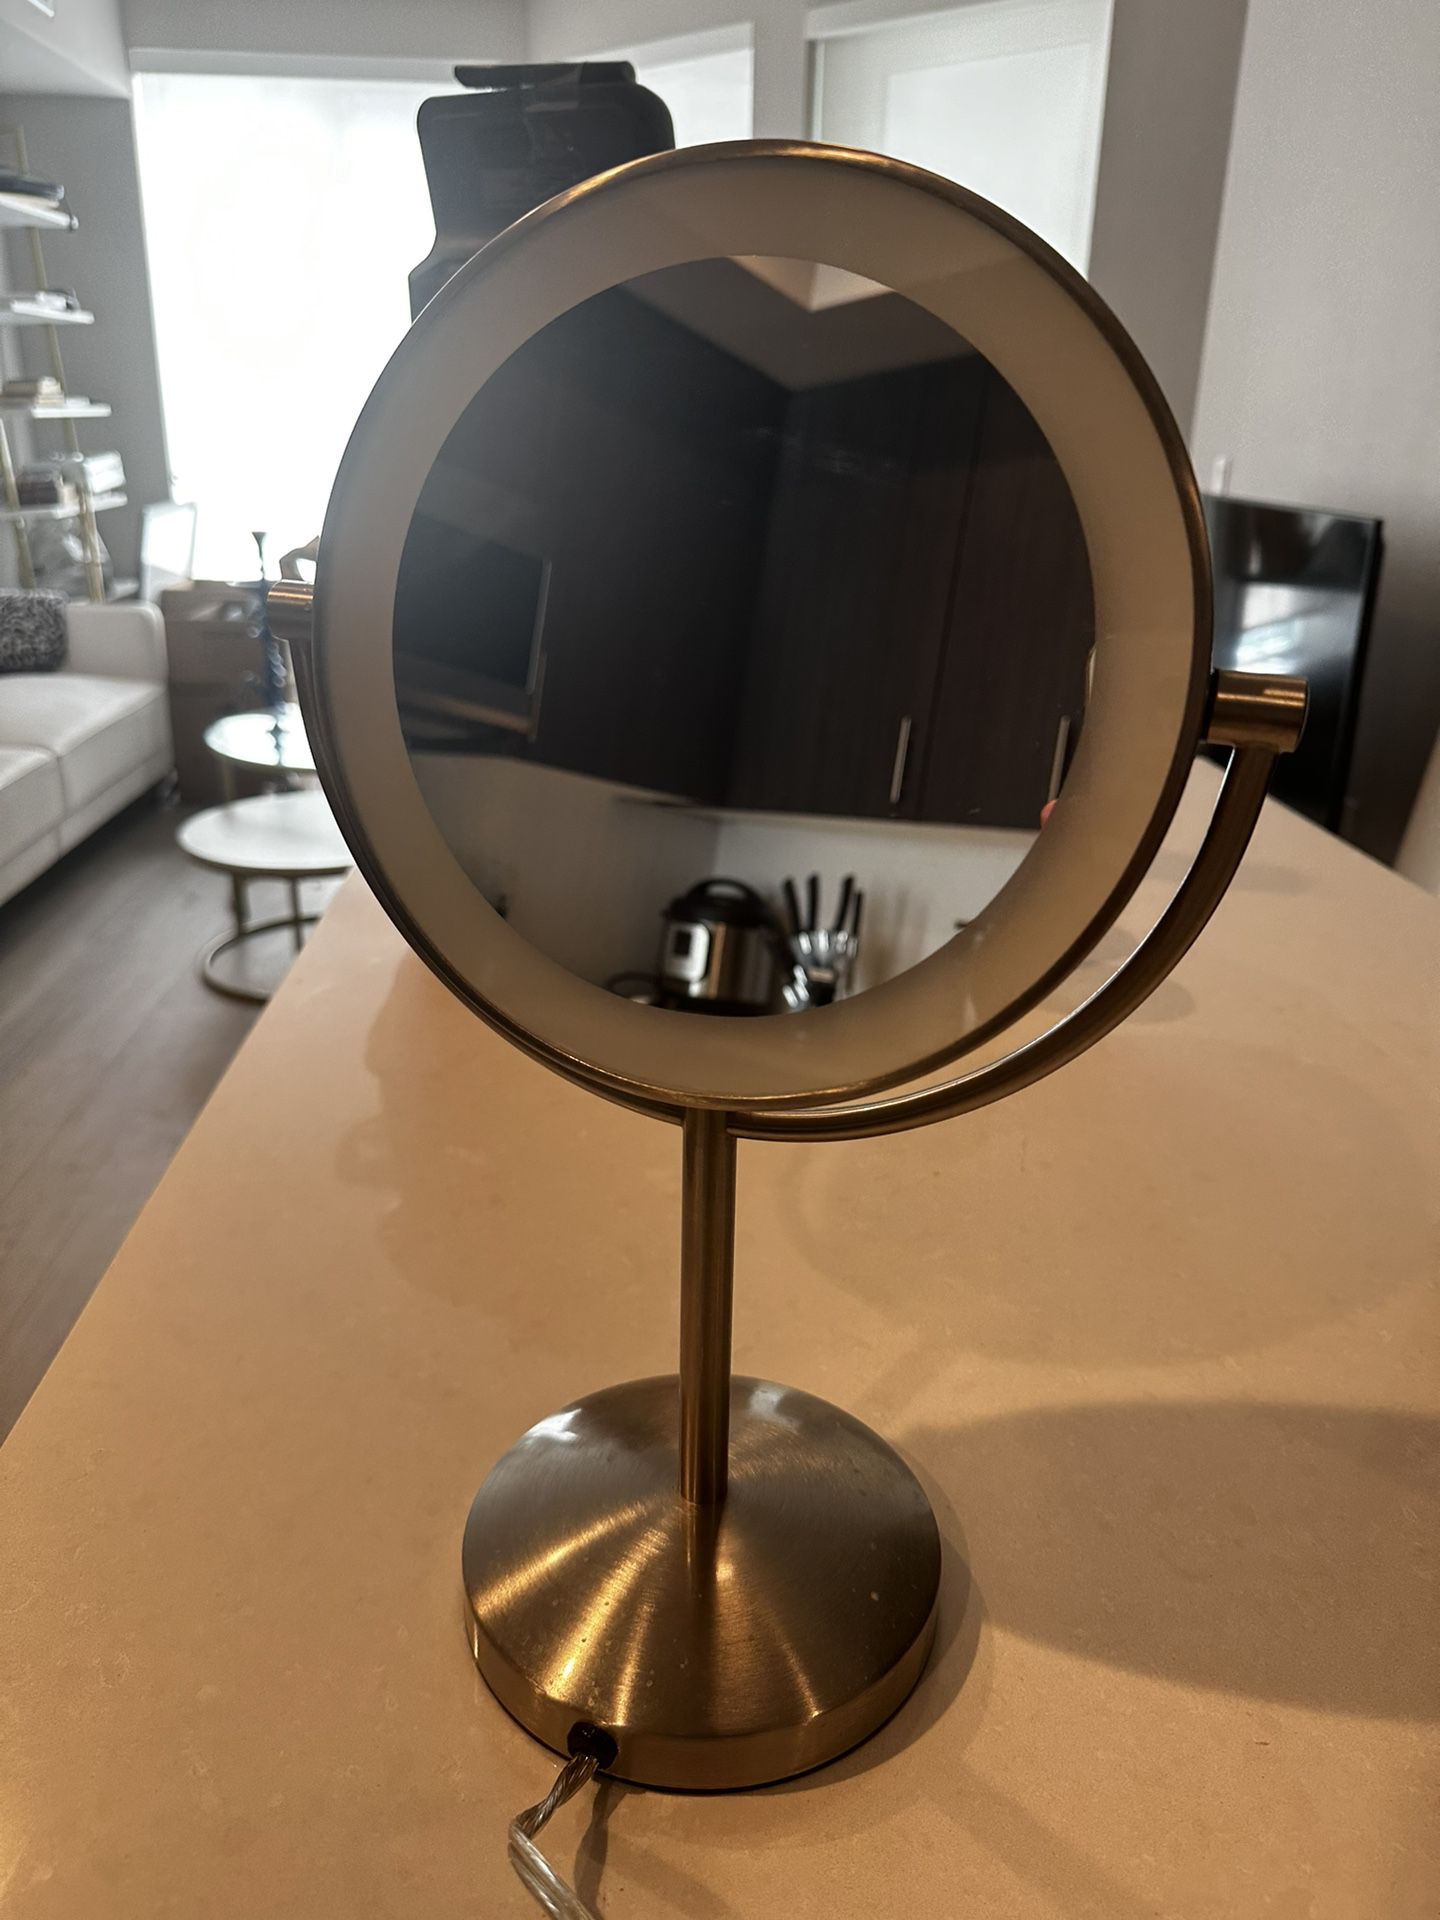 Circular Double Sided Makeup Mirror